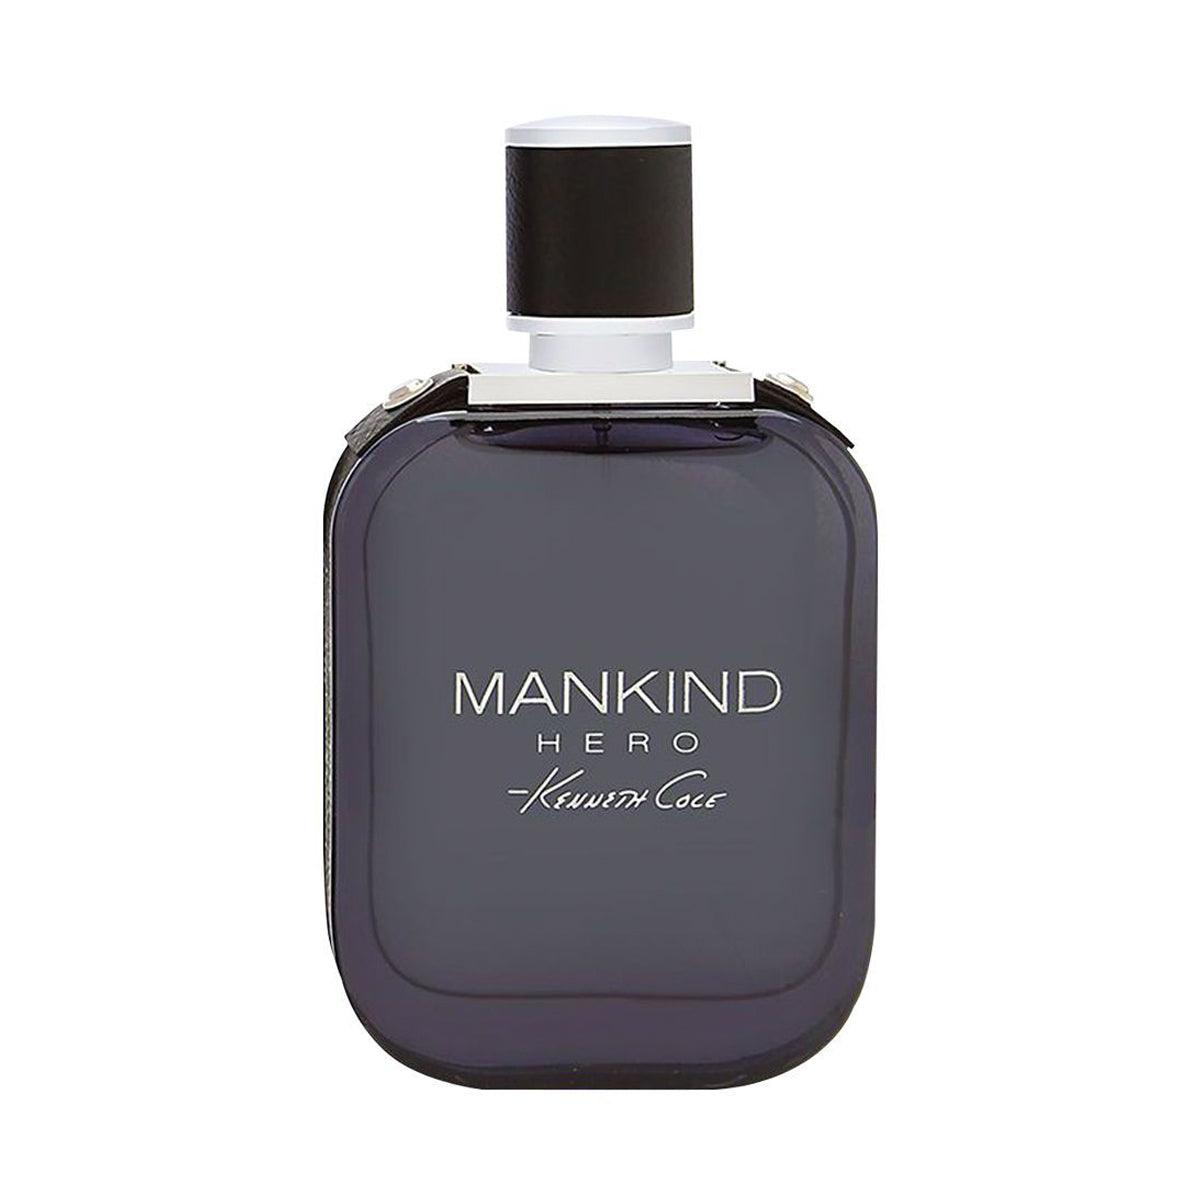 Kenneth Cole Mankind Hero Edt For Men Spray 100ml-Perfume - Allurebeautypk